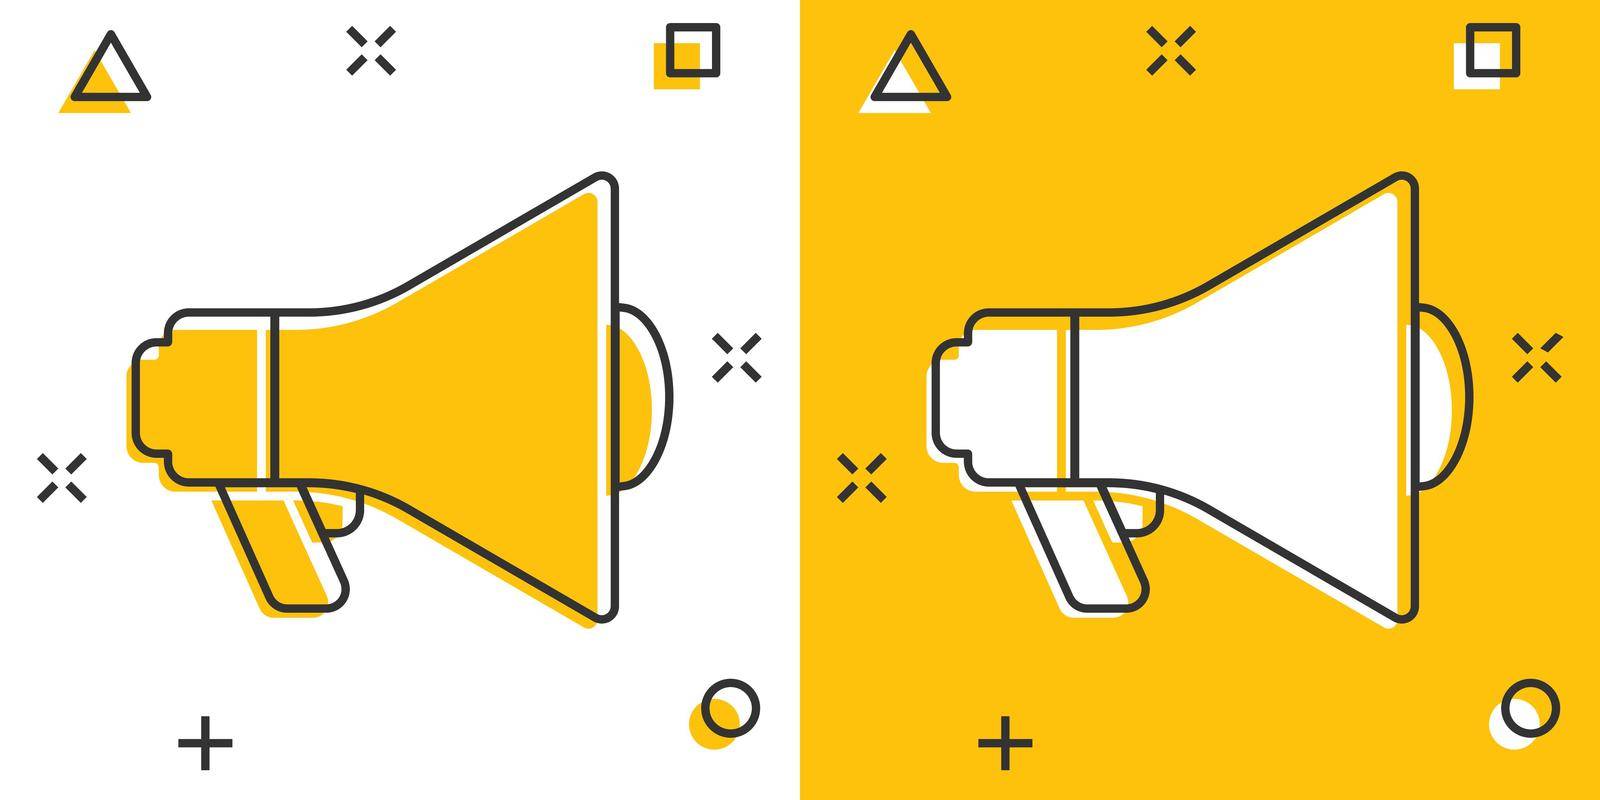 Megaphone speaker icon in comic style. Bullhorn cartoon sign vector illustration on white isolated background. Scream announcement splash effect business concept.